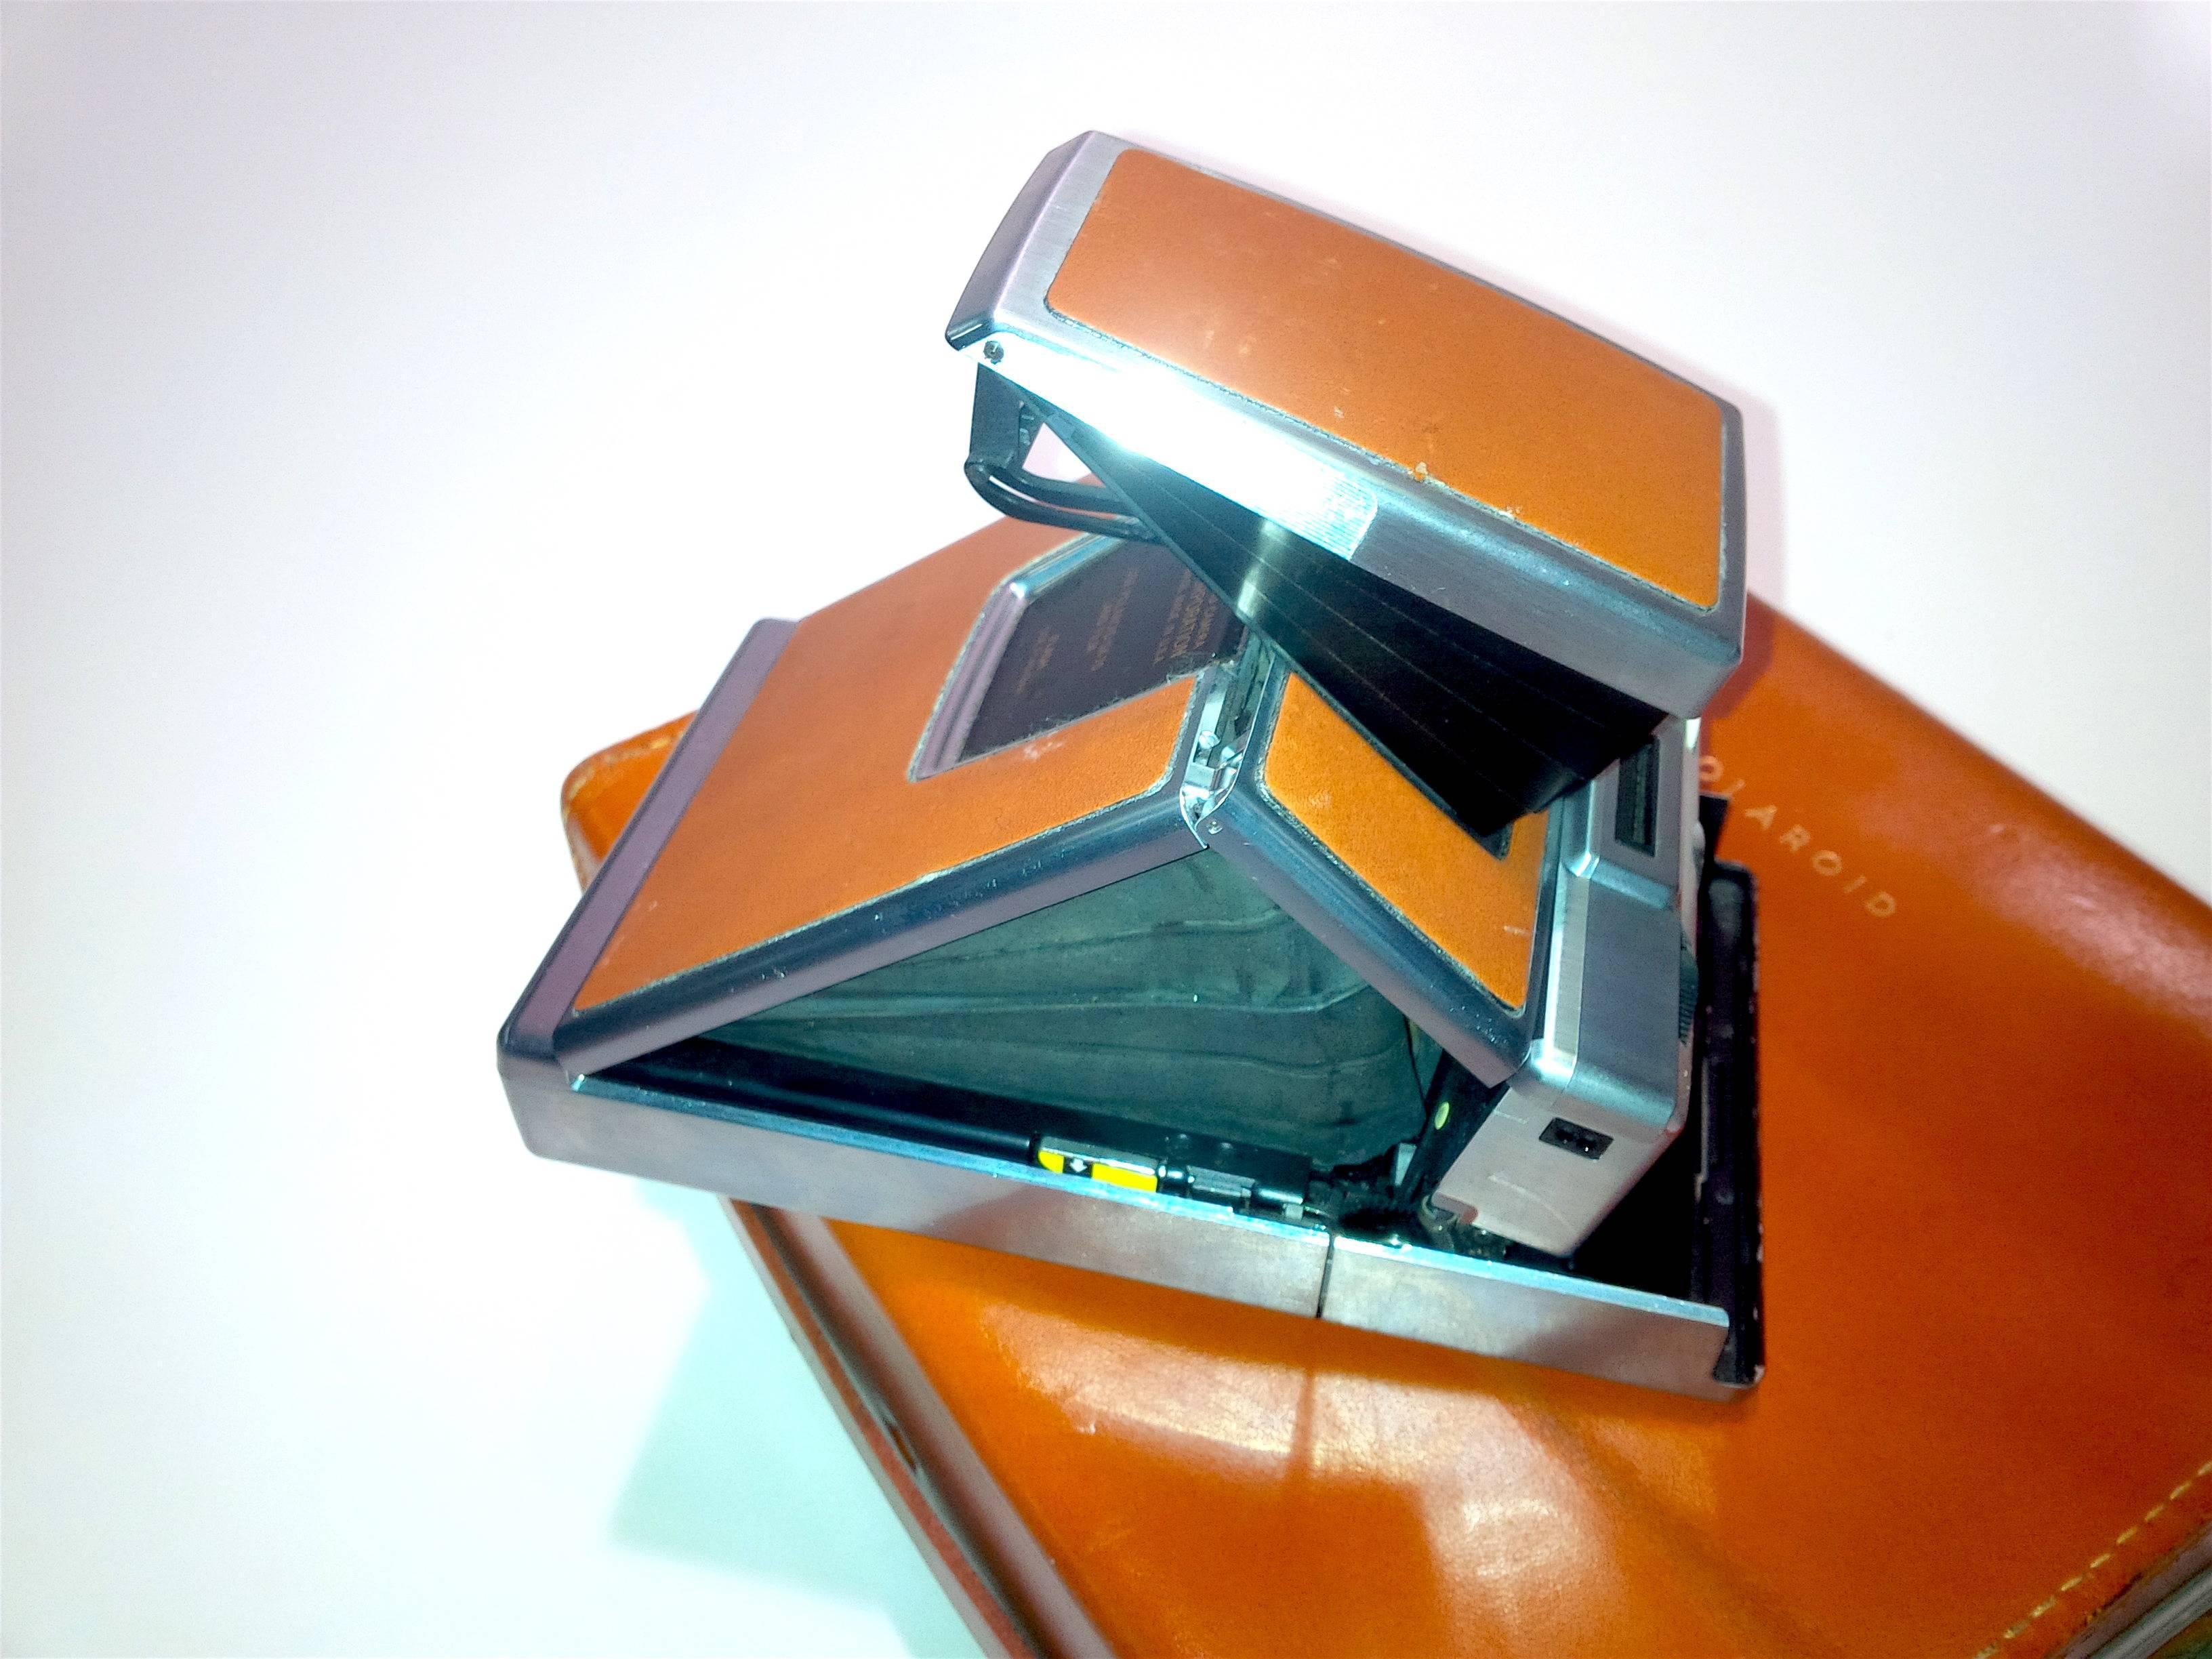 polaroid sx-70 leather case pics